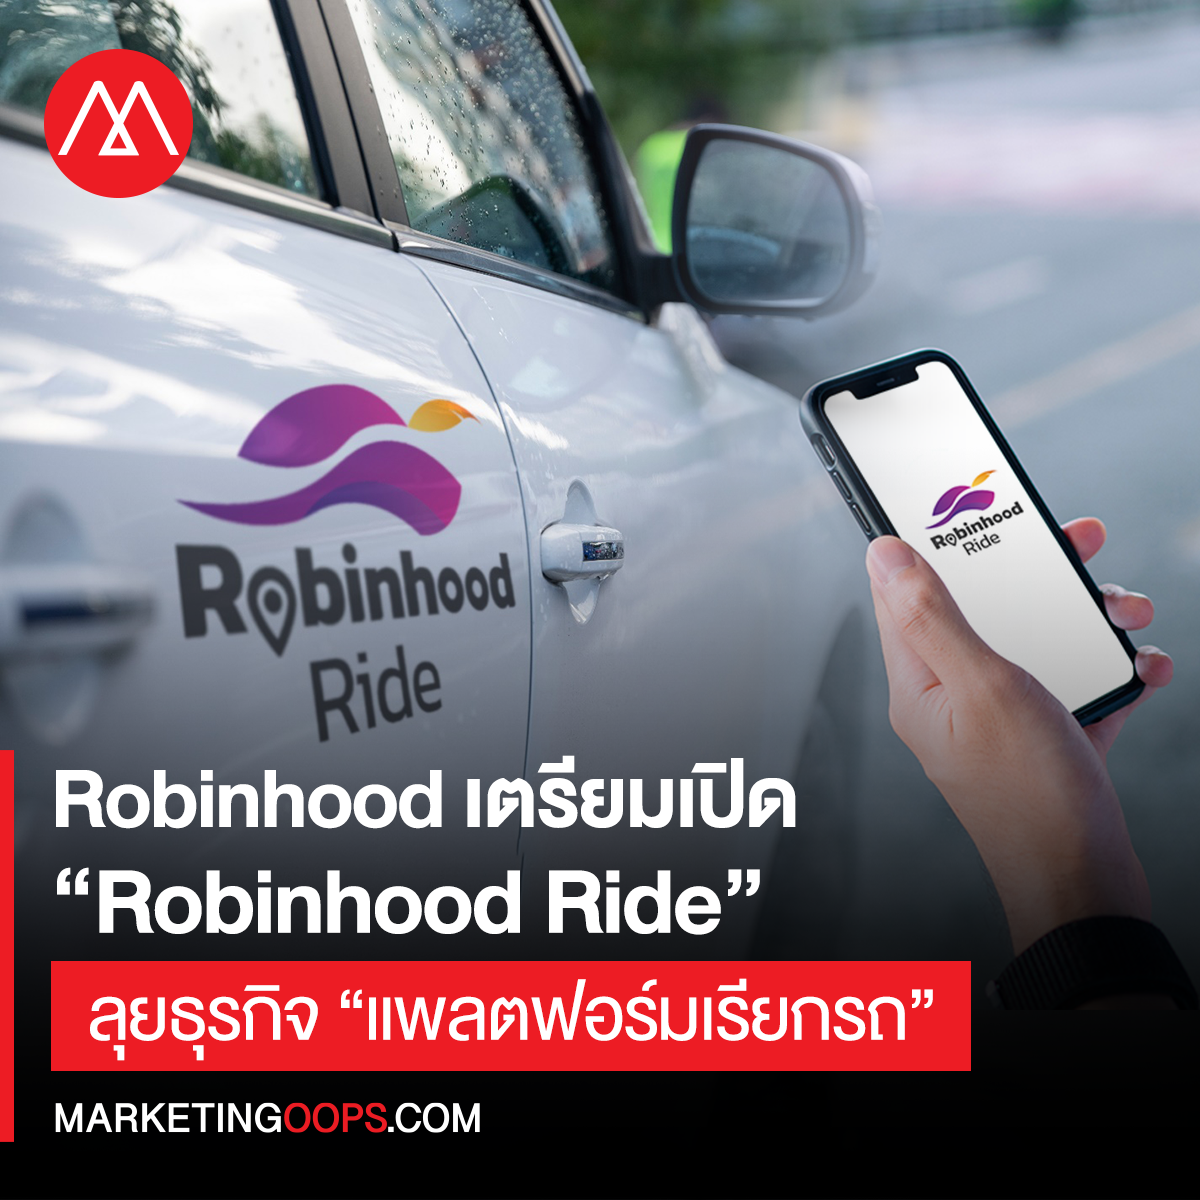 Robinhood เตรียมให้บริการ "Robinhood Ride บริการแพลตฟอร์มเรียกรถ" (Transportation Platform) คาดสามารถเปิดให้บริการปลายปี 2565